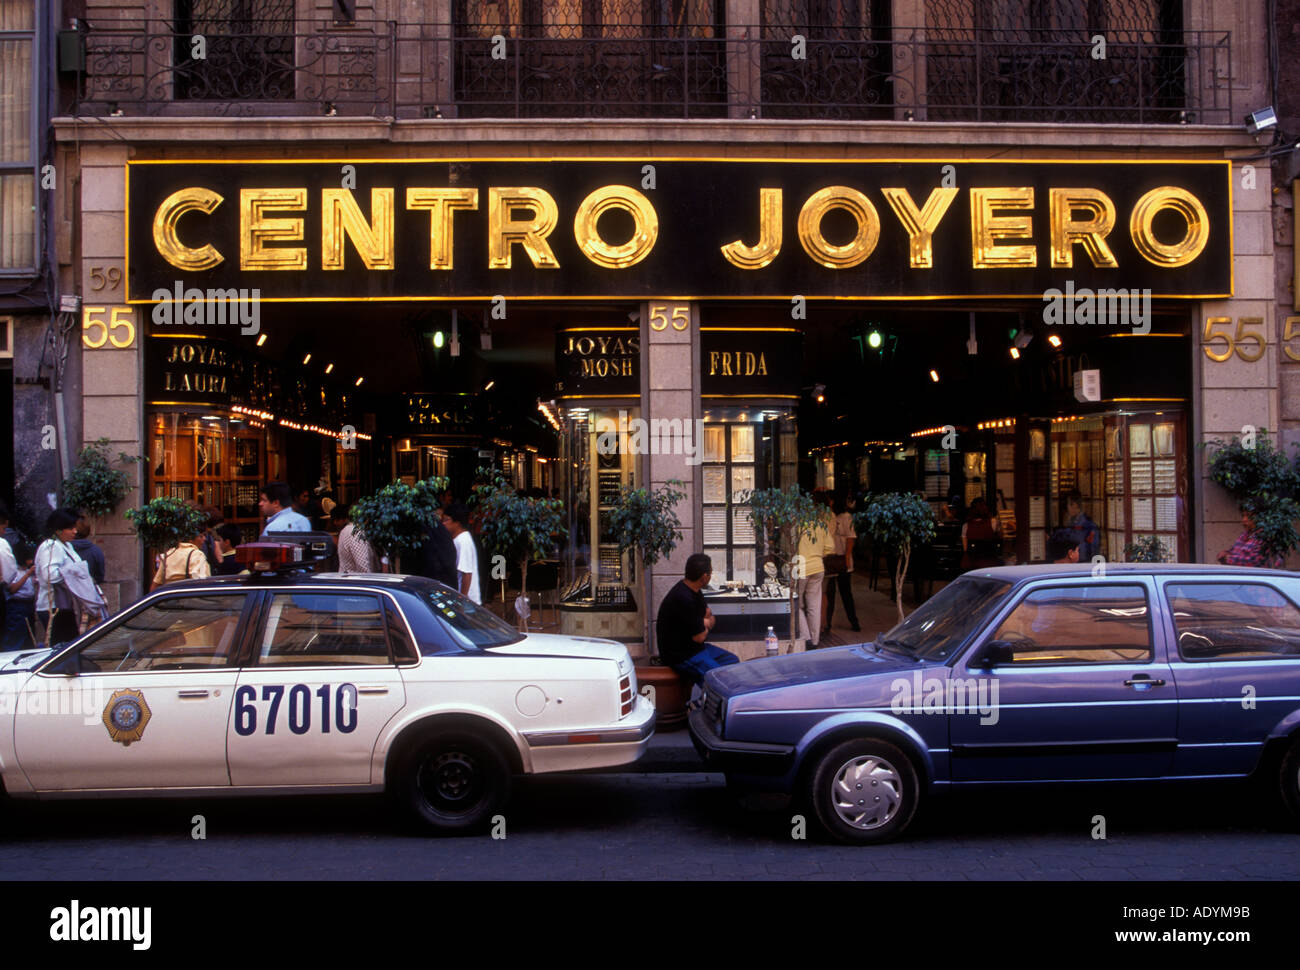 Centro joyeria bijoux, magasin, vitrine, façade, calle Francisco I Madero, Mexico, district fédéral, Mexique Banque D'Images